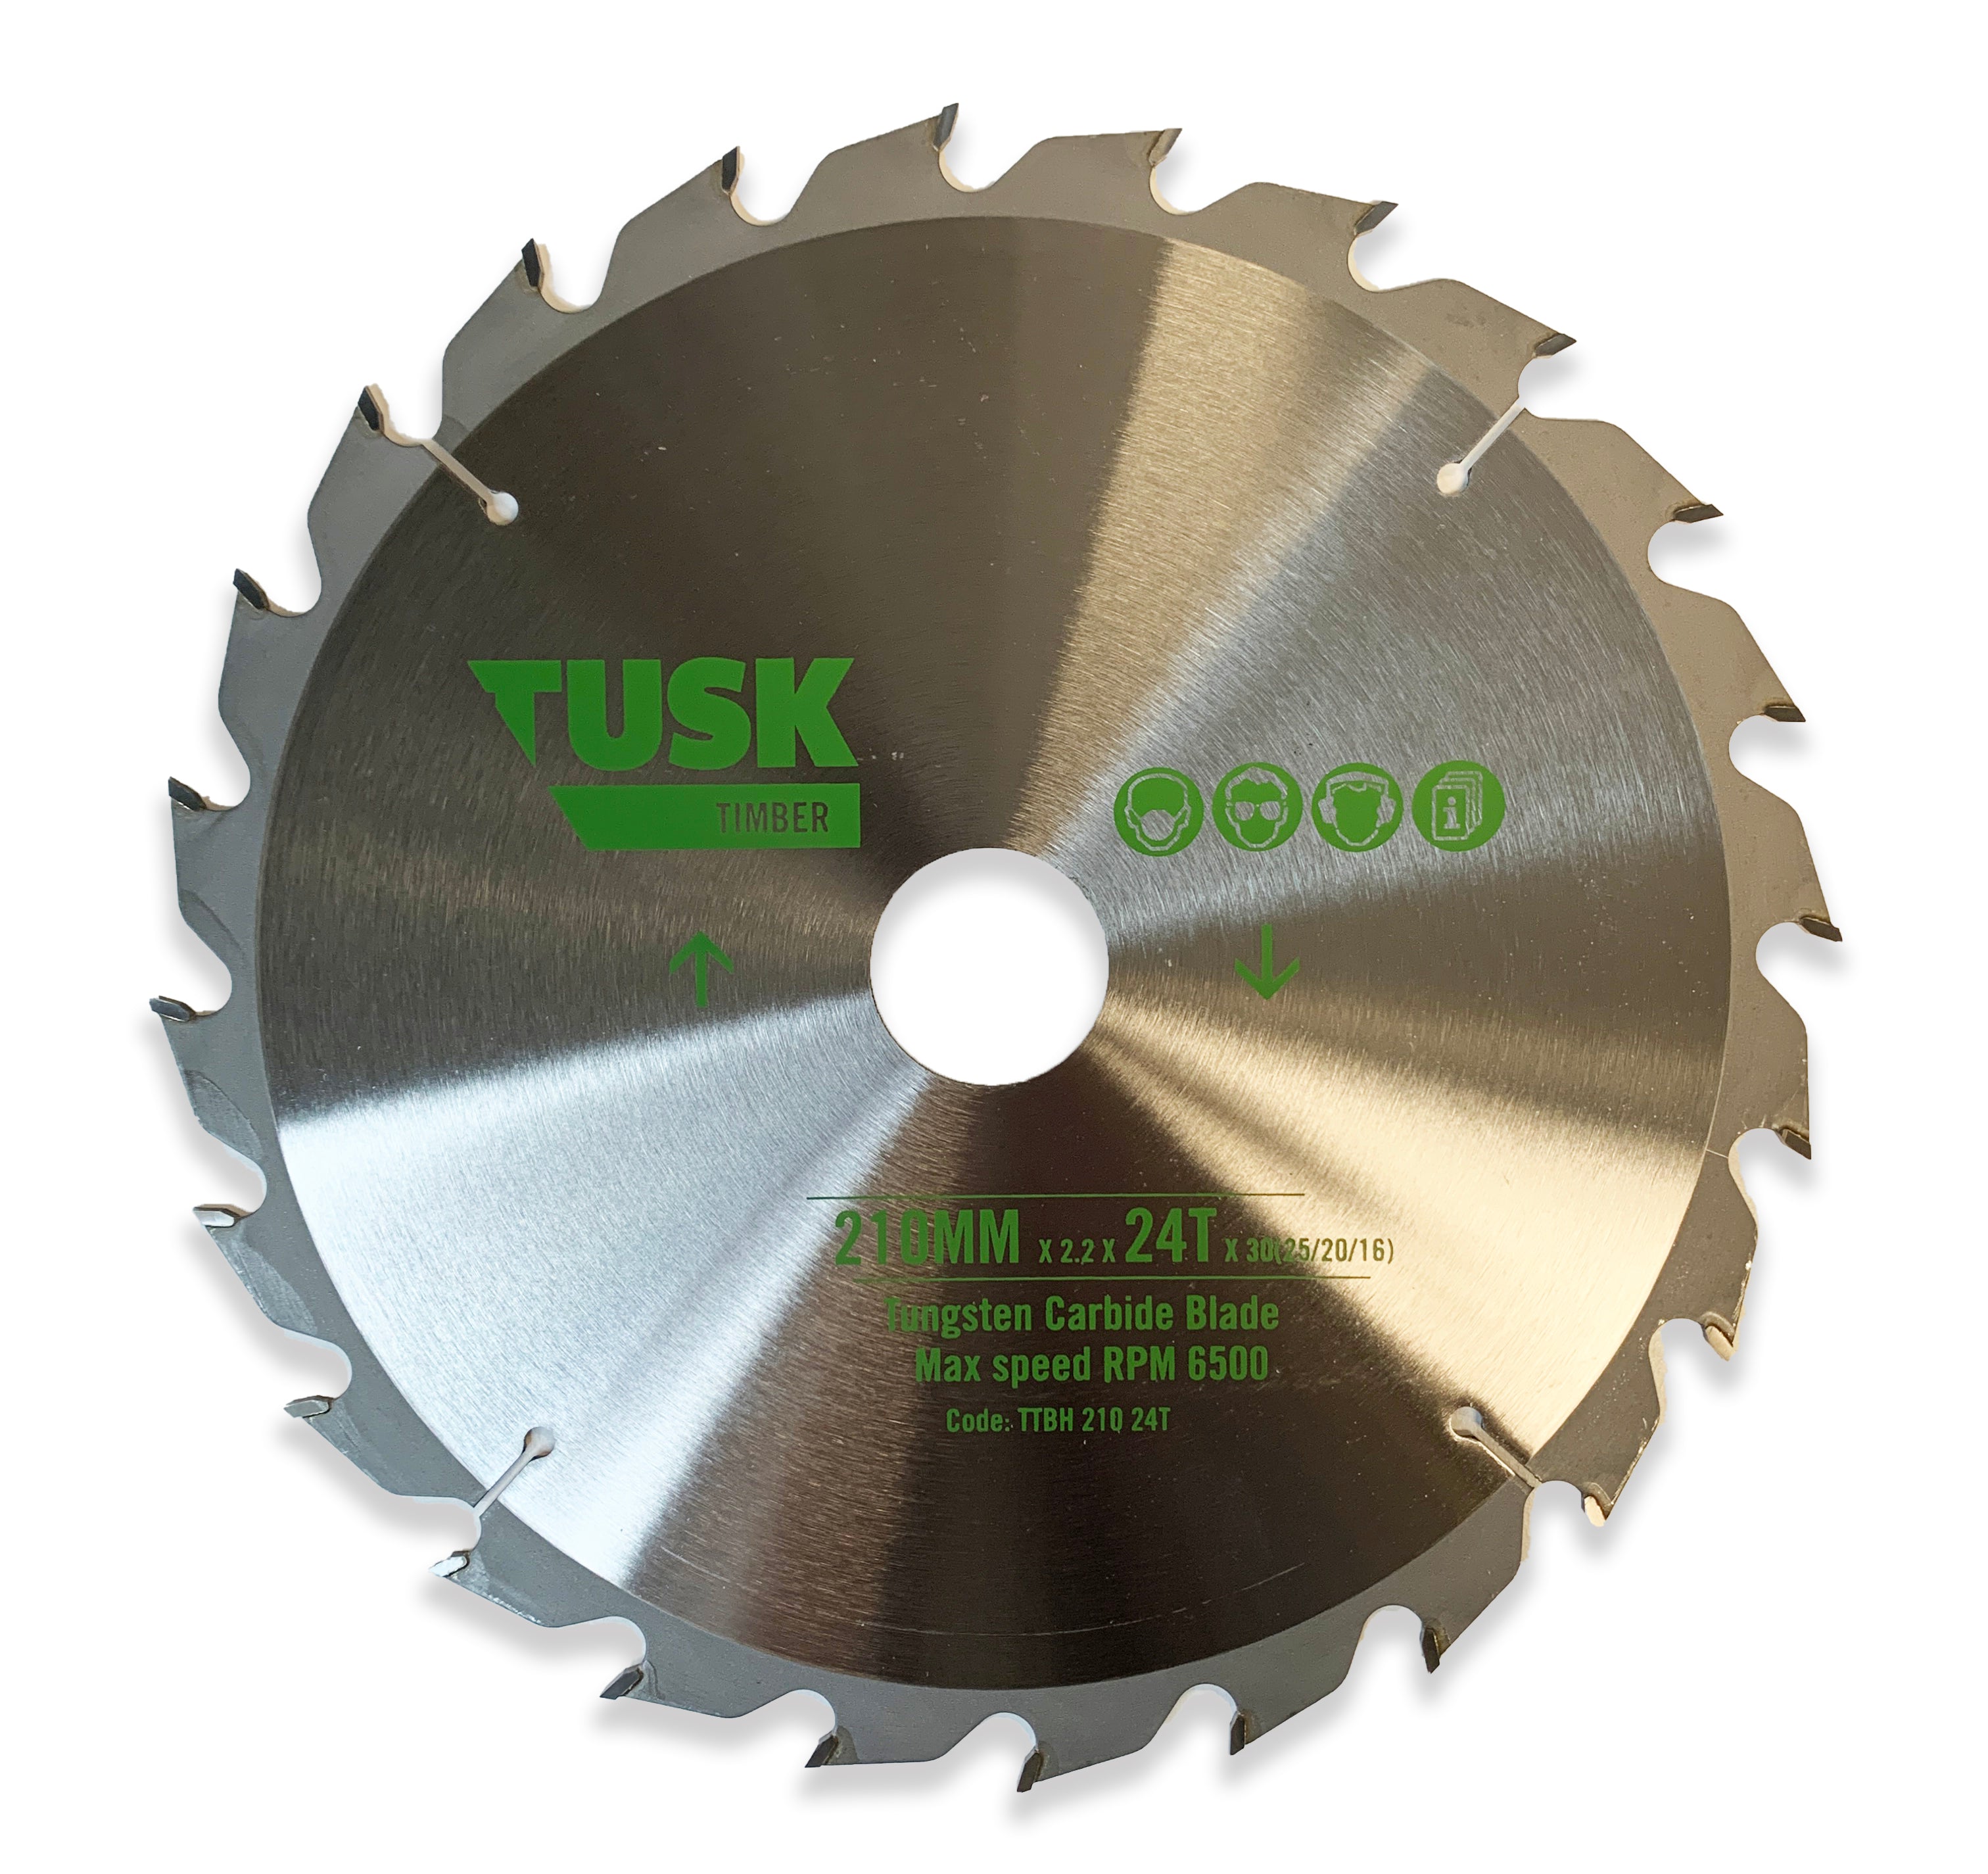 Tusk Timber Tungsten Carbide Blades - 185 X 2.0/1.2 X 40T X 20 (20/16)